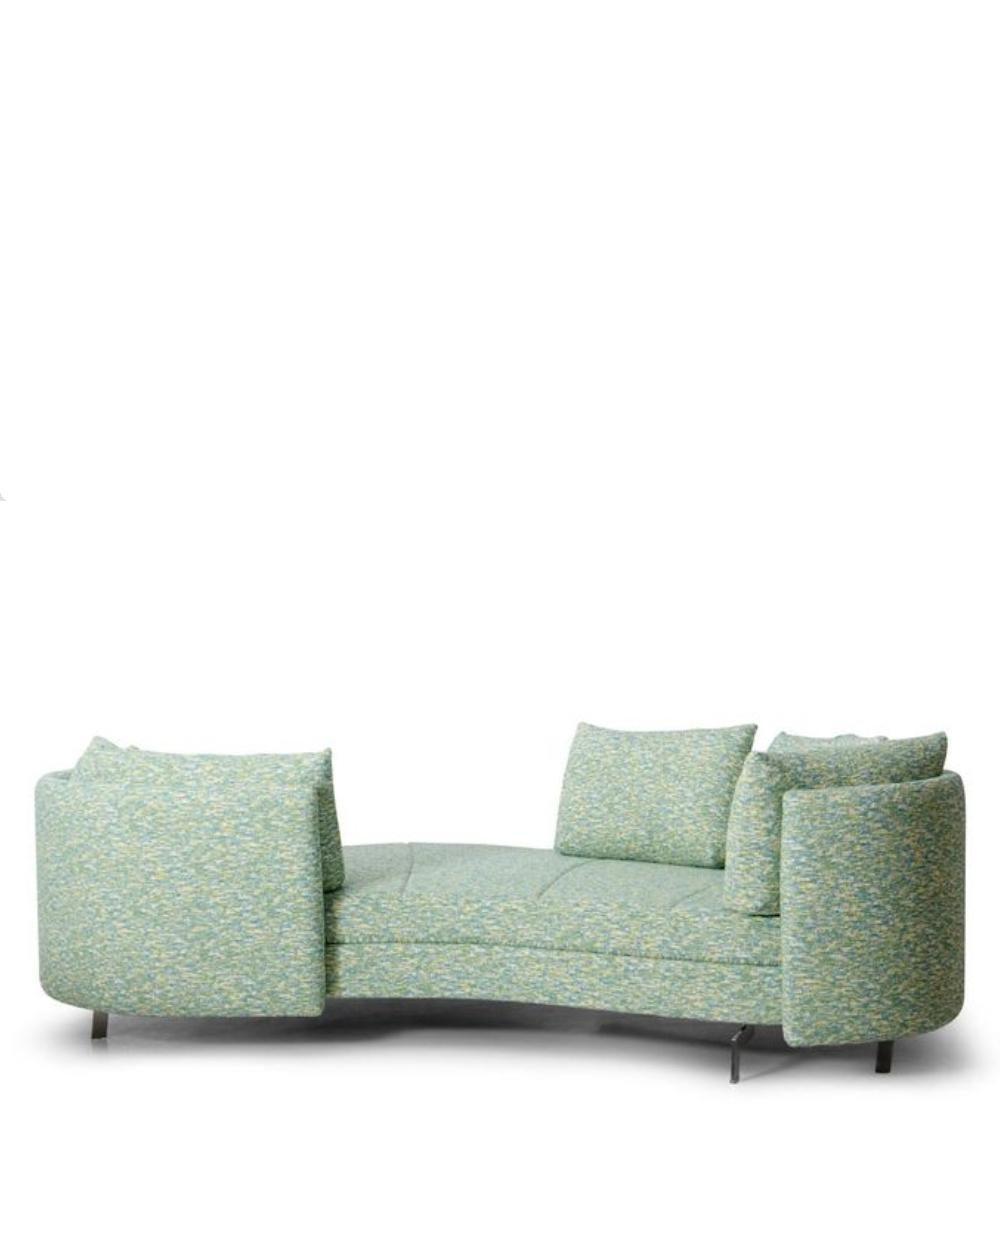 De Sede DS-167 ISLAND OUTDOOR Sofa by Hugo de Ruiter In New Condition For Sale In Brooklyn, NY